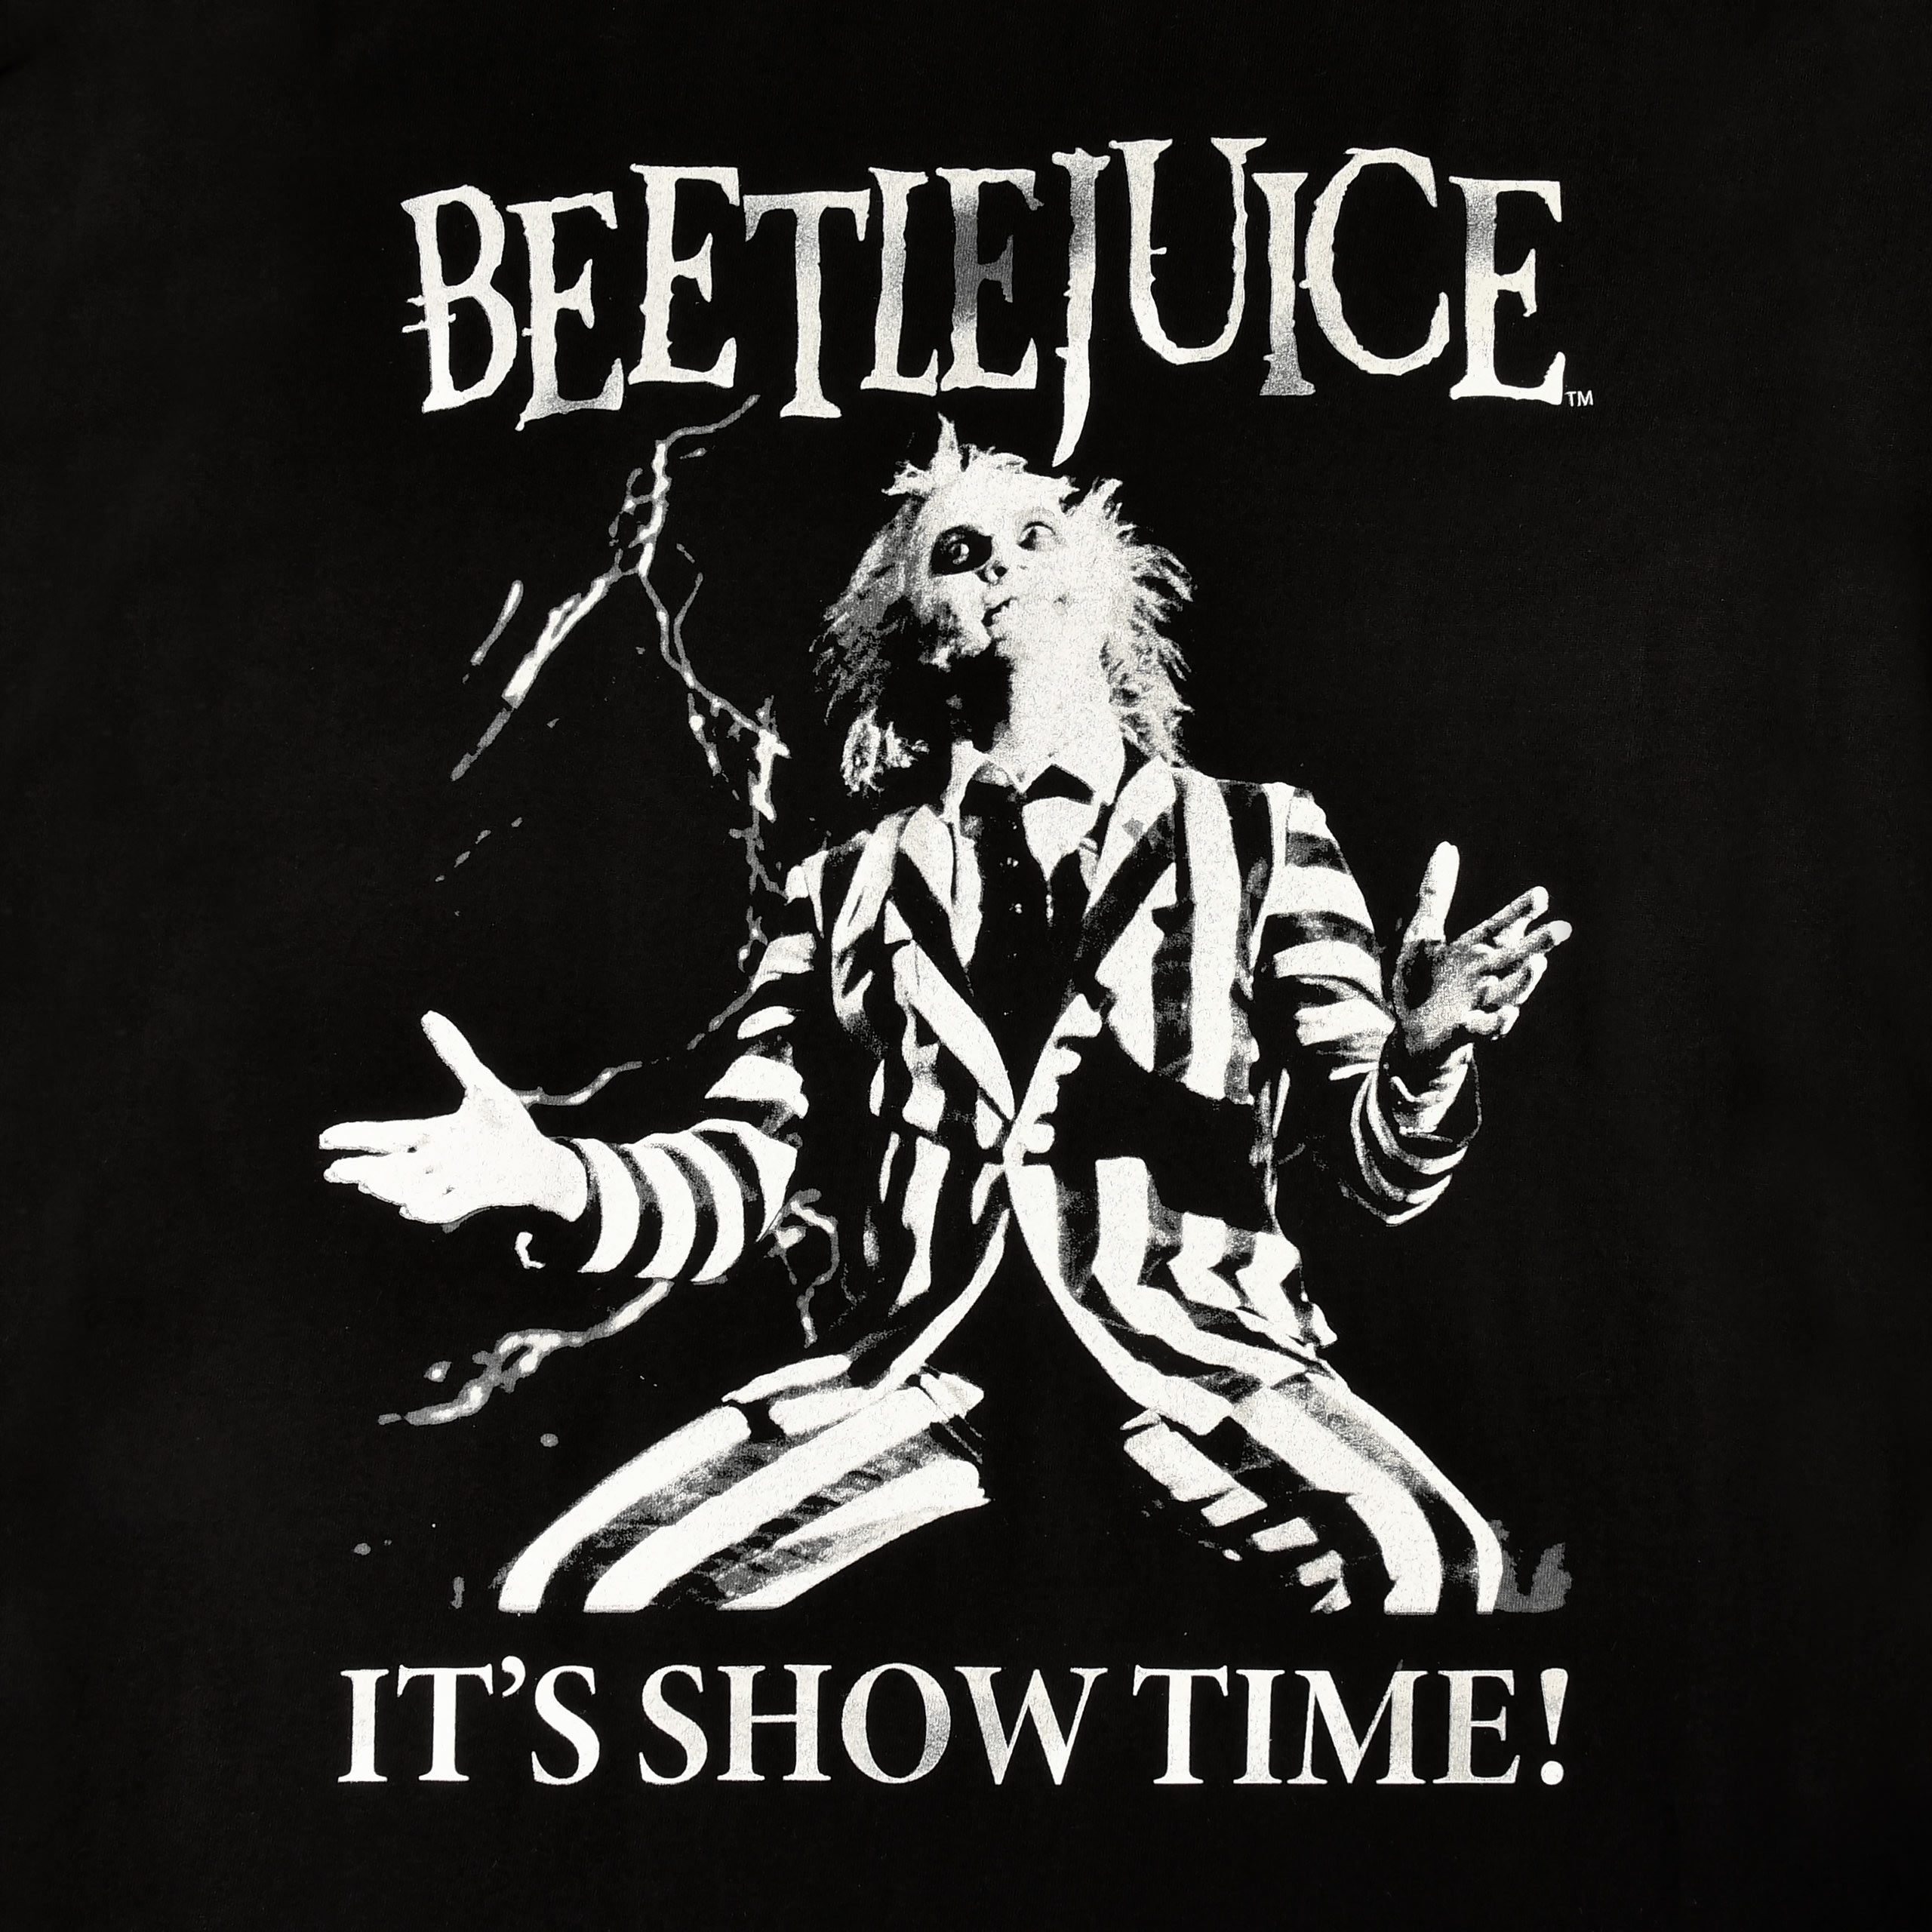 Beetlejuice - It's Show Time! T-Shirt Black